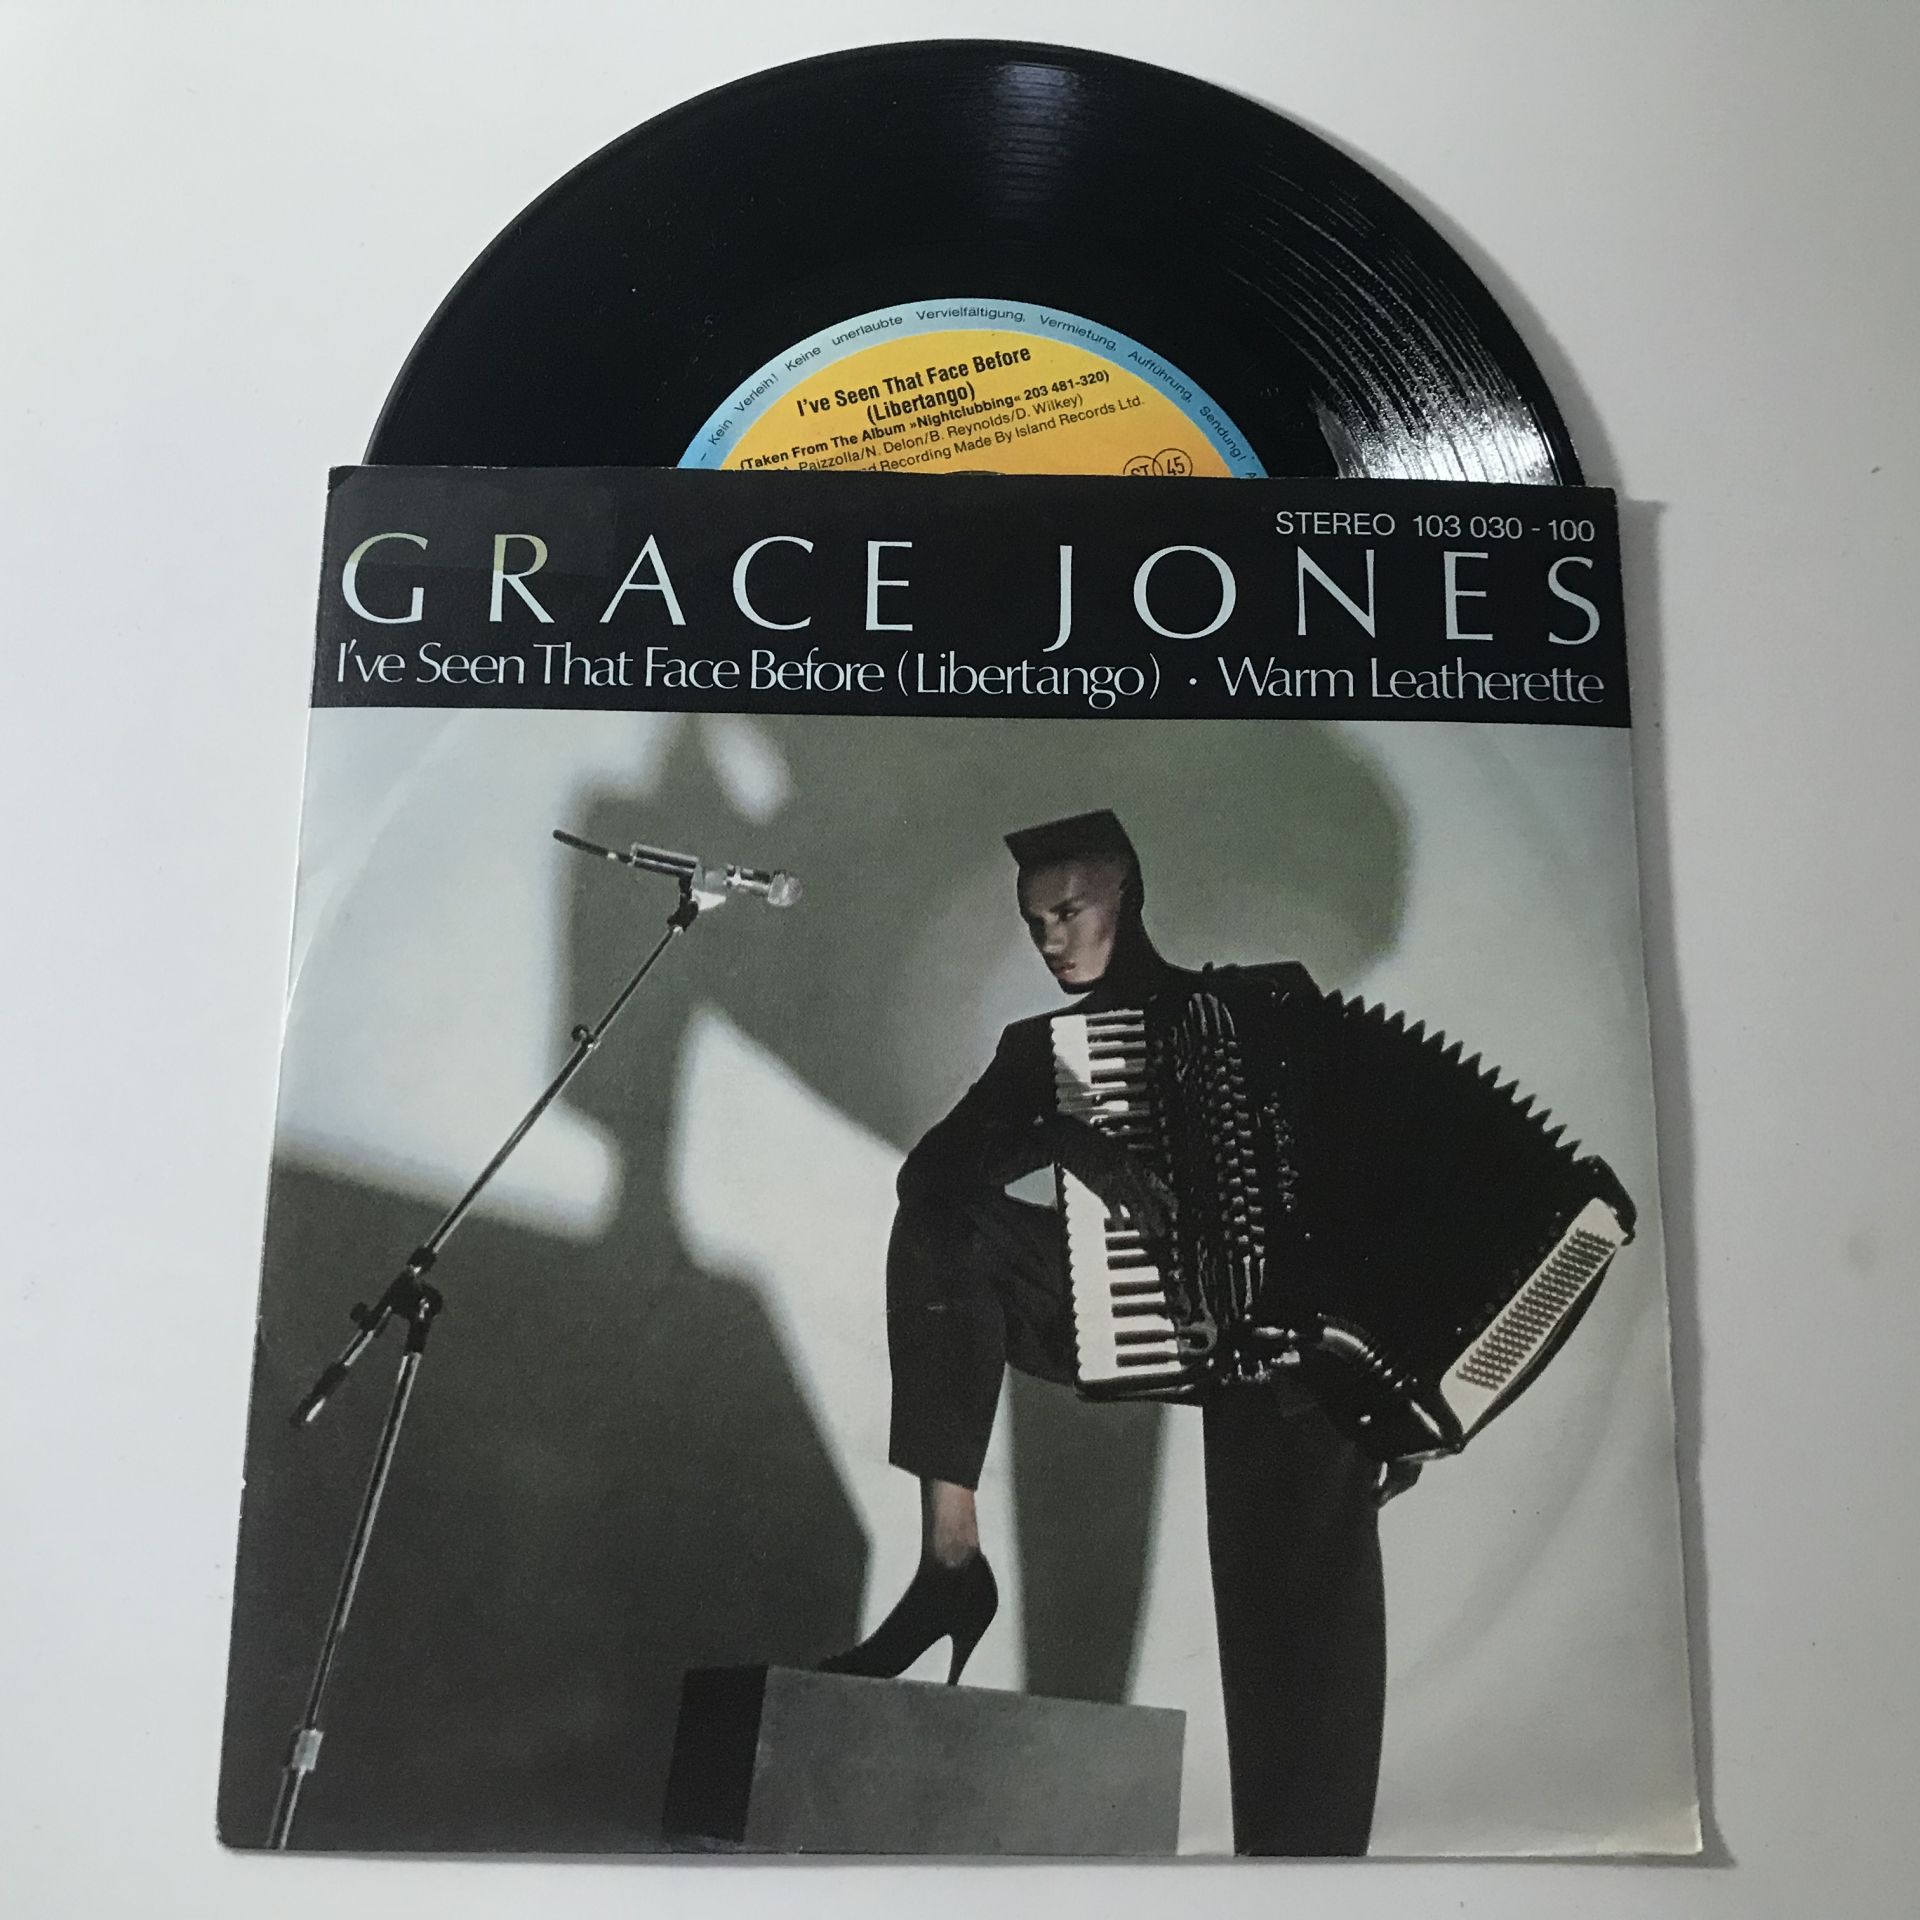 Grace Jones – I've Seen That Face Before (Libertango) / Warm Leatherette